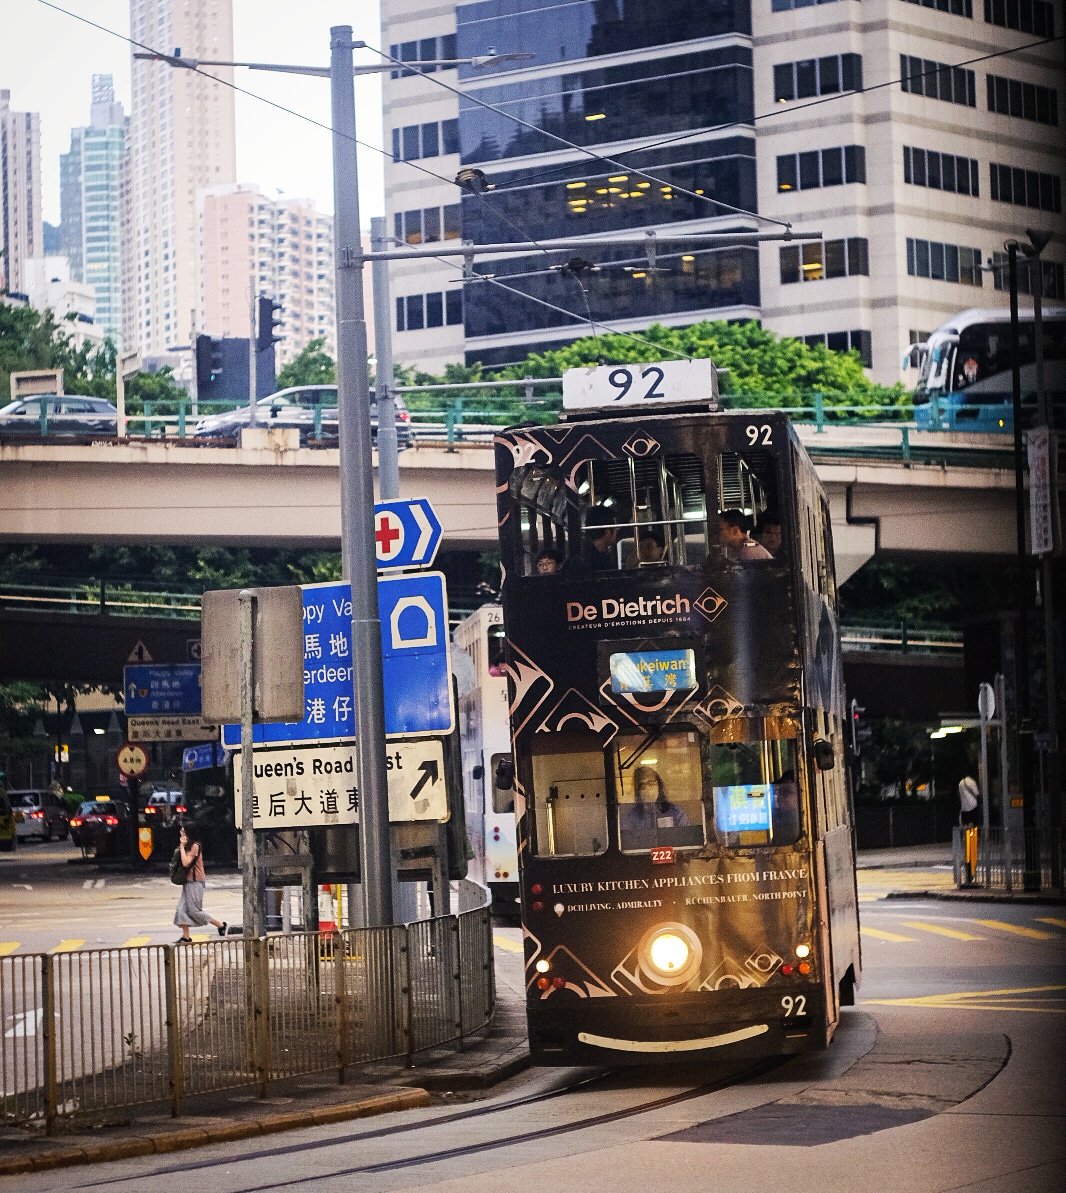 Run Happy Valley...🚋✨ #hkig #discoveryhongkong #streetphotography #tram #hkiger #hongkongtram #tramstop #hongkonginsta #happyvalley #hongkonglife #neonsign  #neonlights #hktram #tramway #電車 #電車倶楽部 #under_the_sign_hongkong